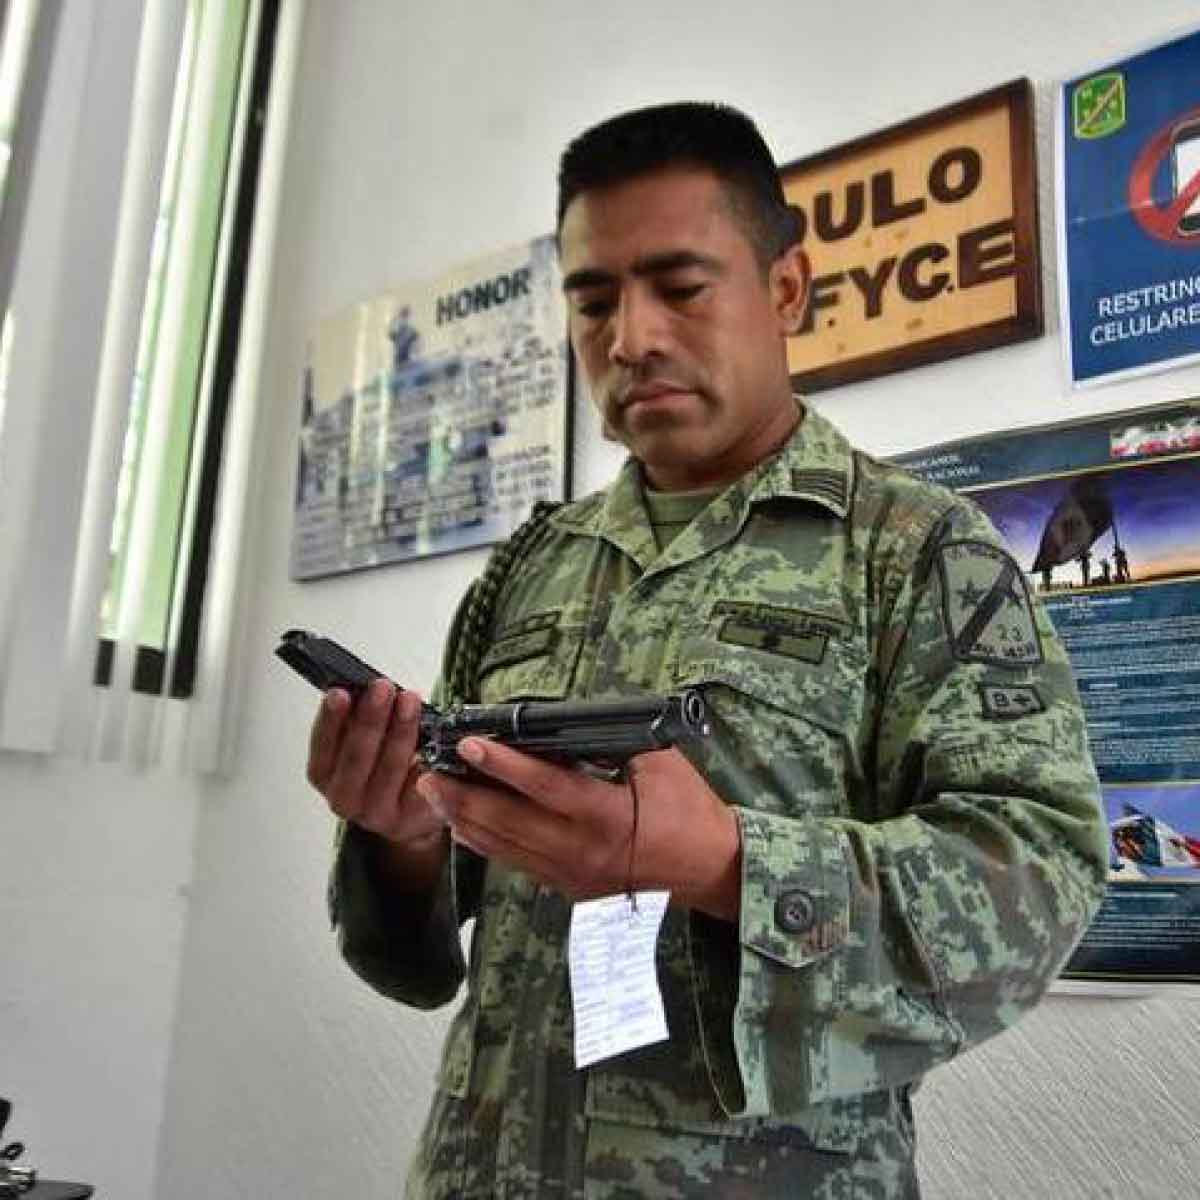 Municipio de Querétaro anuncia próxima jornada contra las armas. Foto: ST